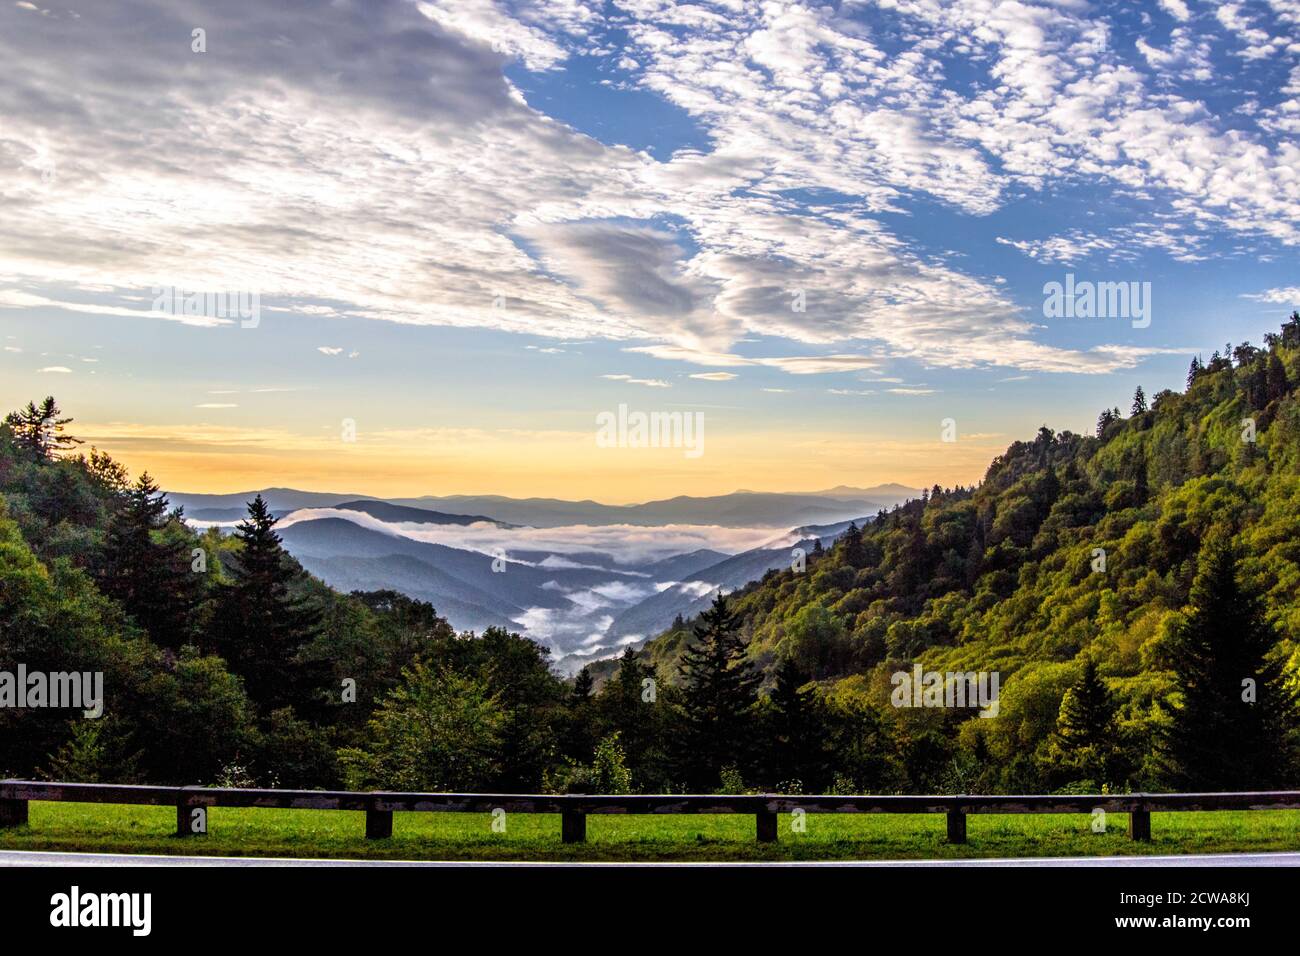 Tolles Panorama Bei Sonnenuntergang In Den Smoky Mountains. Sonnenuntergang am Straßenrand mit Blick auf die neu entdeckte Gap Road des Great Smoky Mountains National Park in Gatlinburg Stockfoto